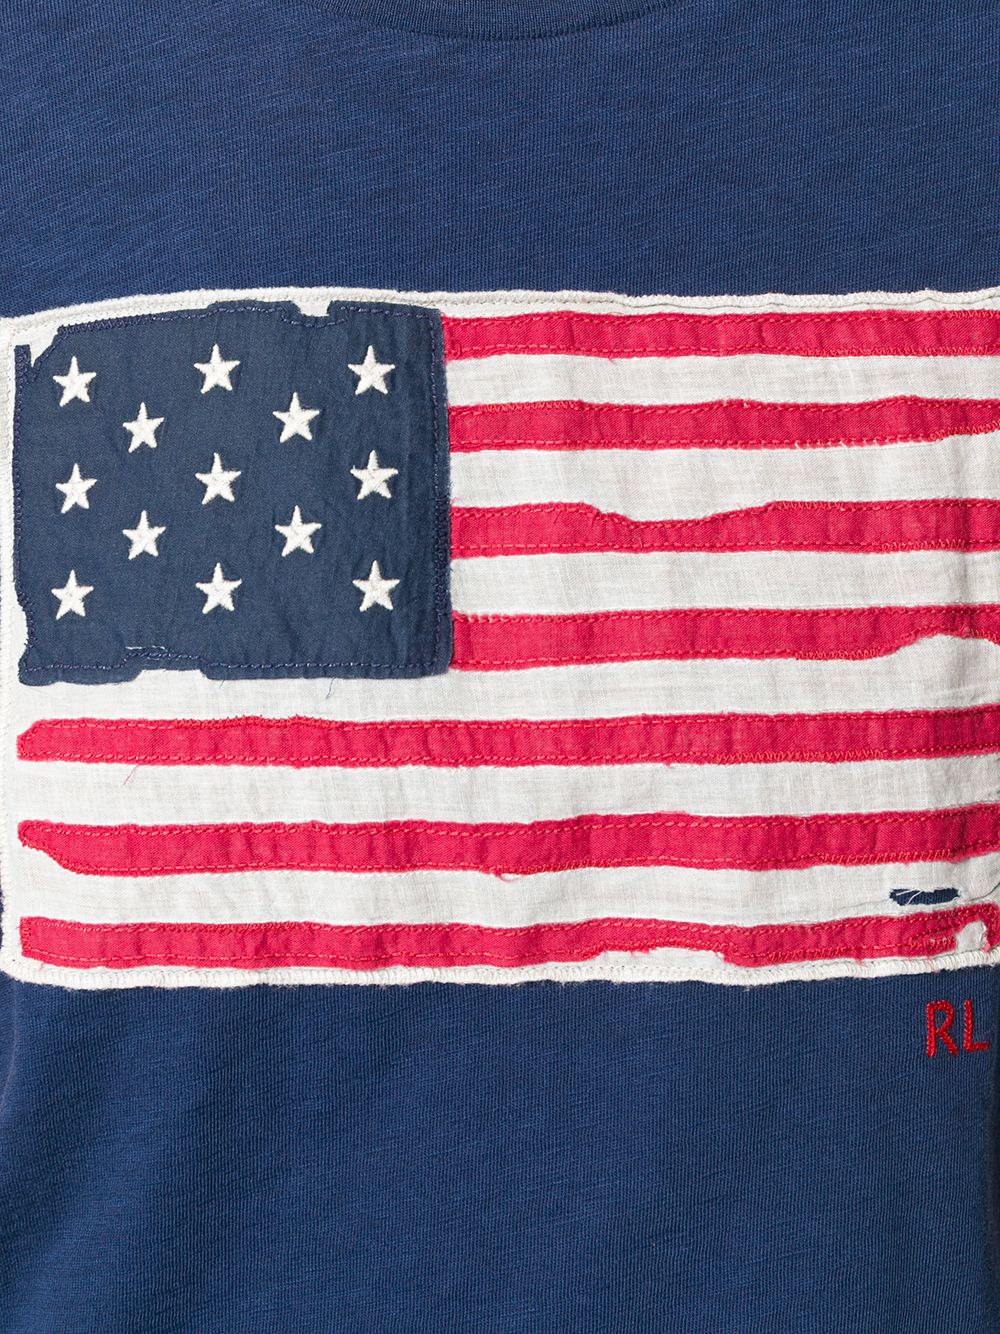 Polo Ralph Lauren American Flag T-shirt - Farfetch